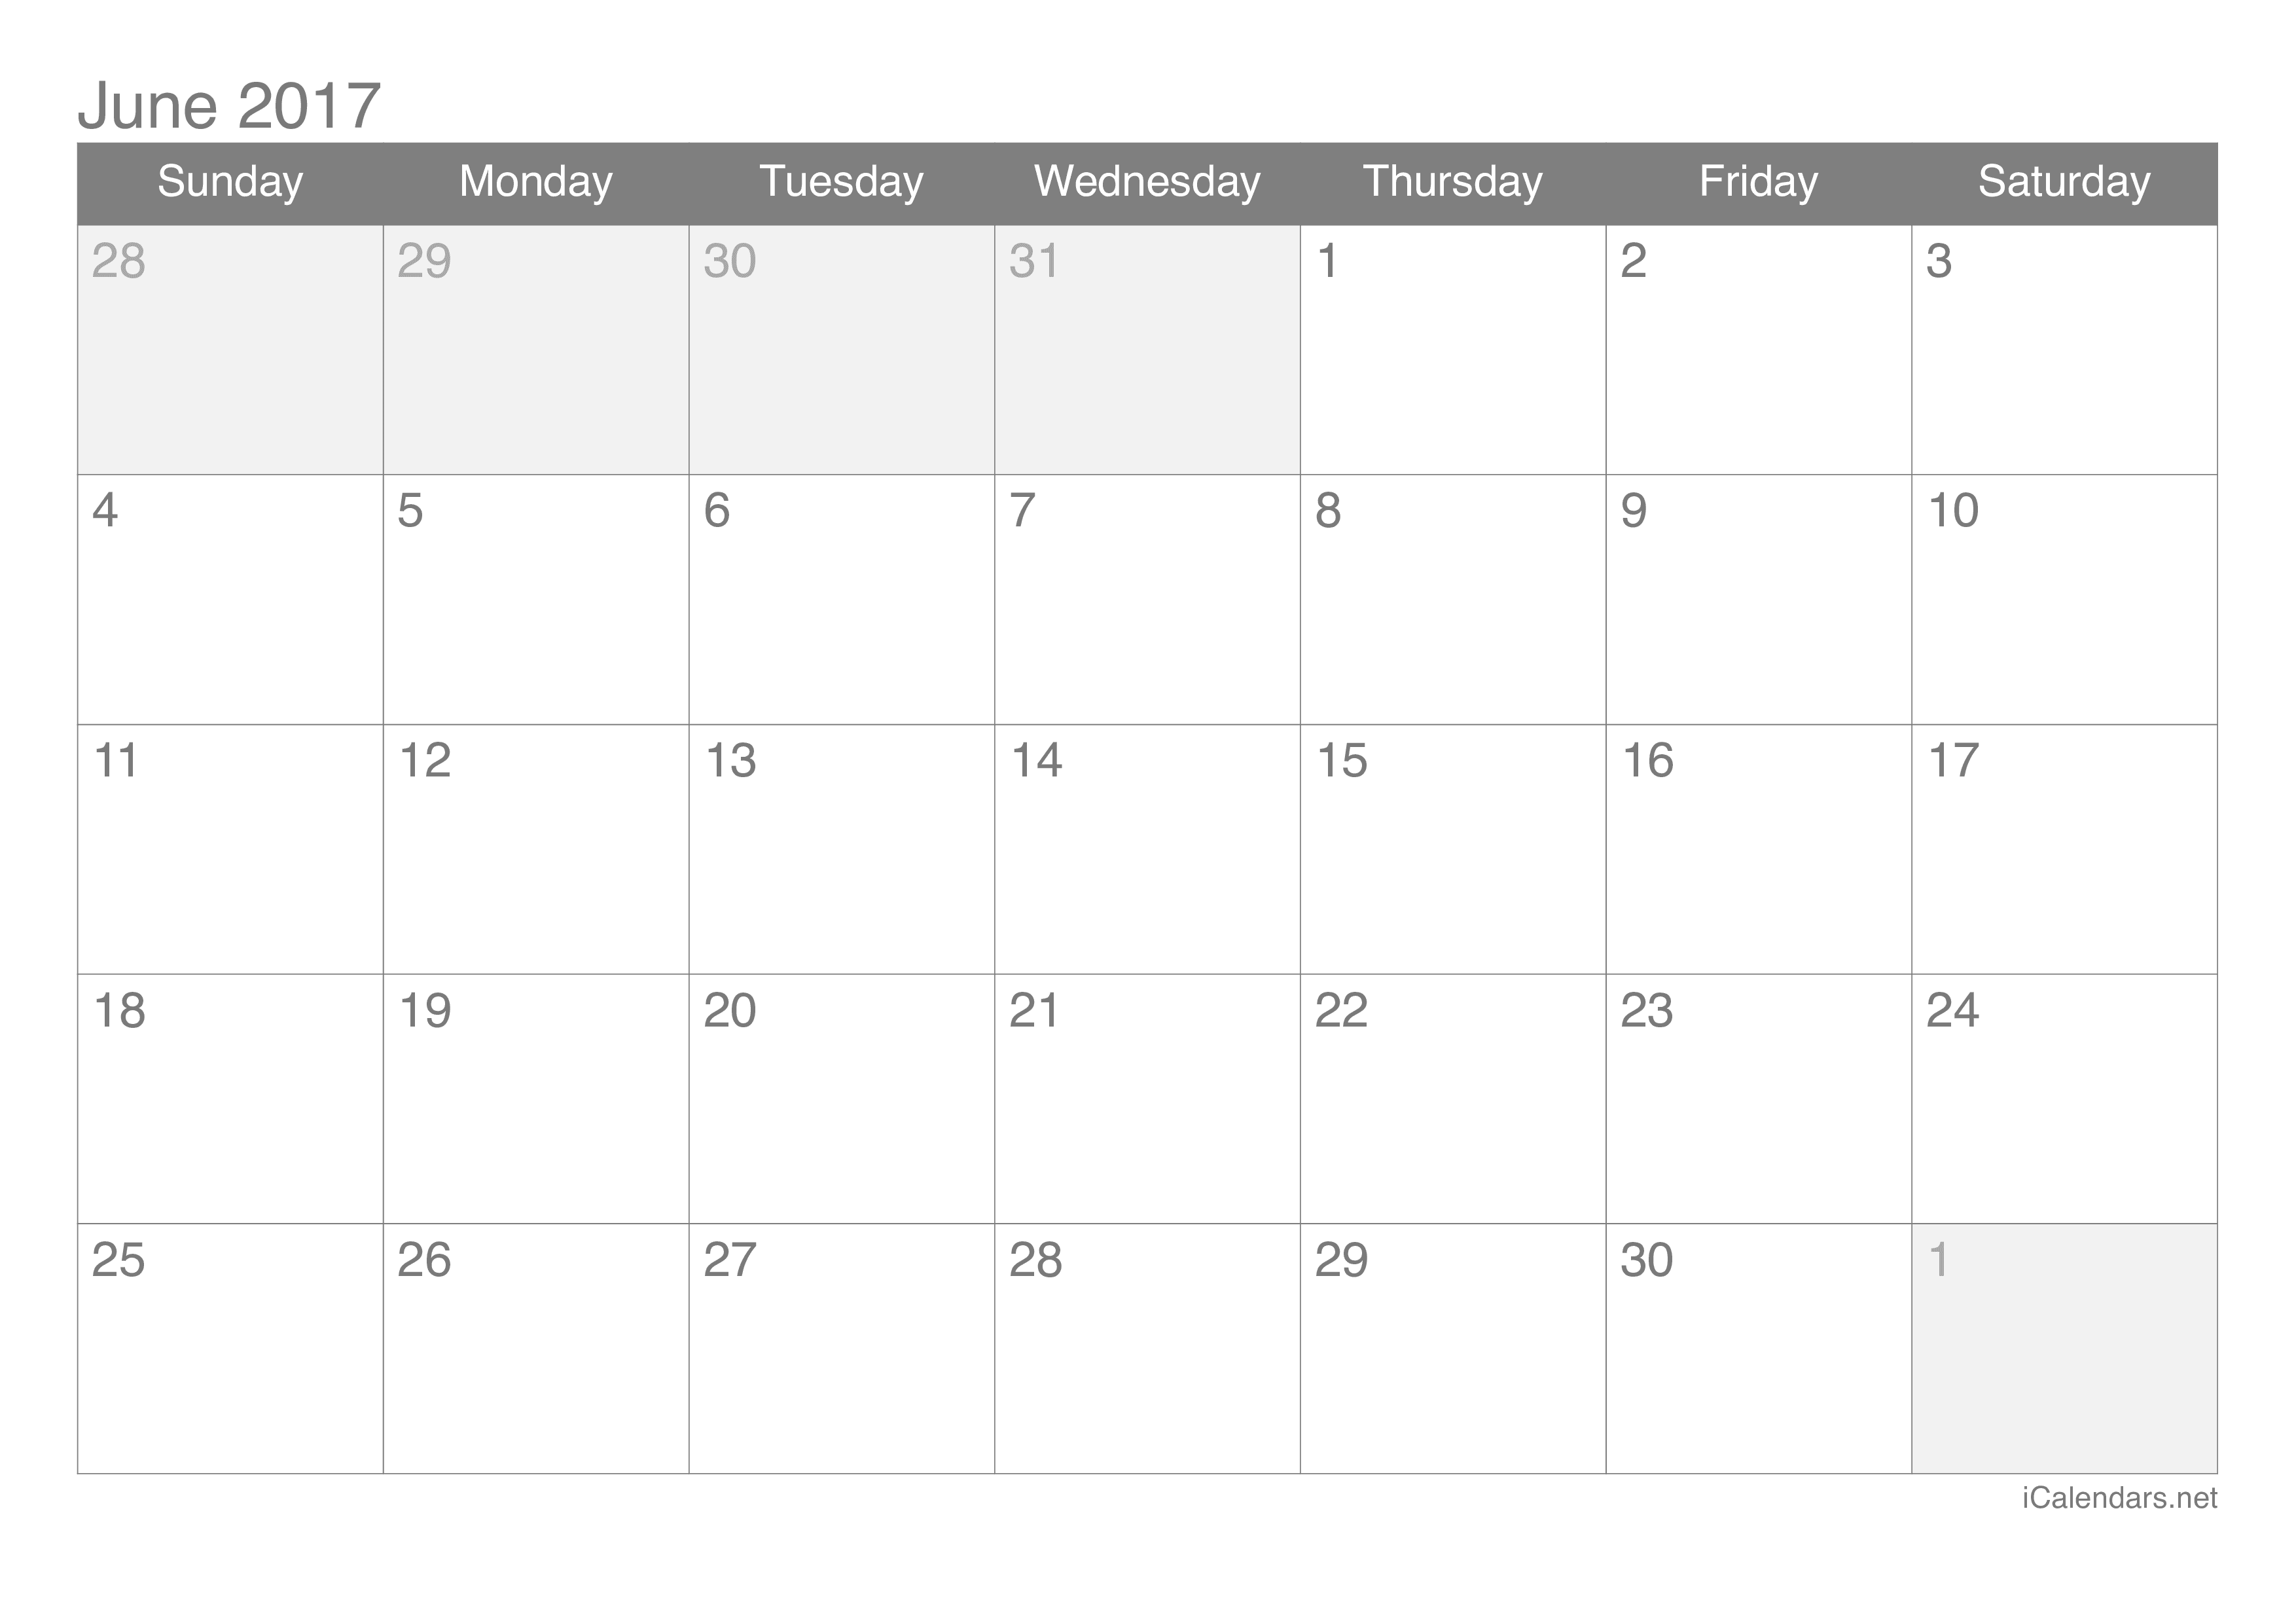 June 2017 Printable Calendar icalendars net